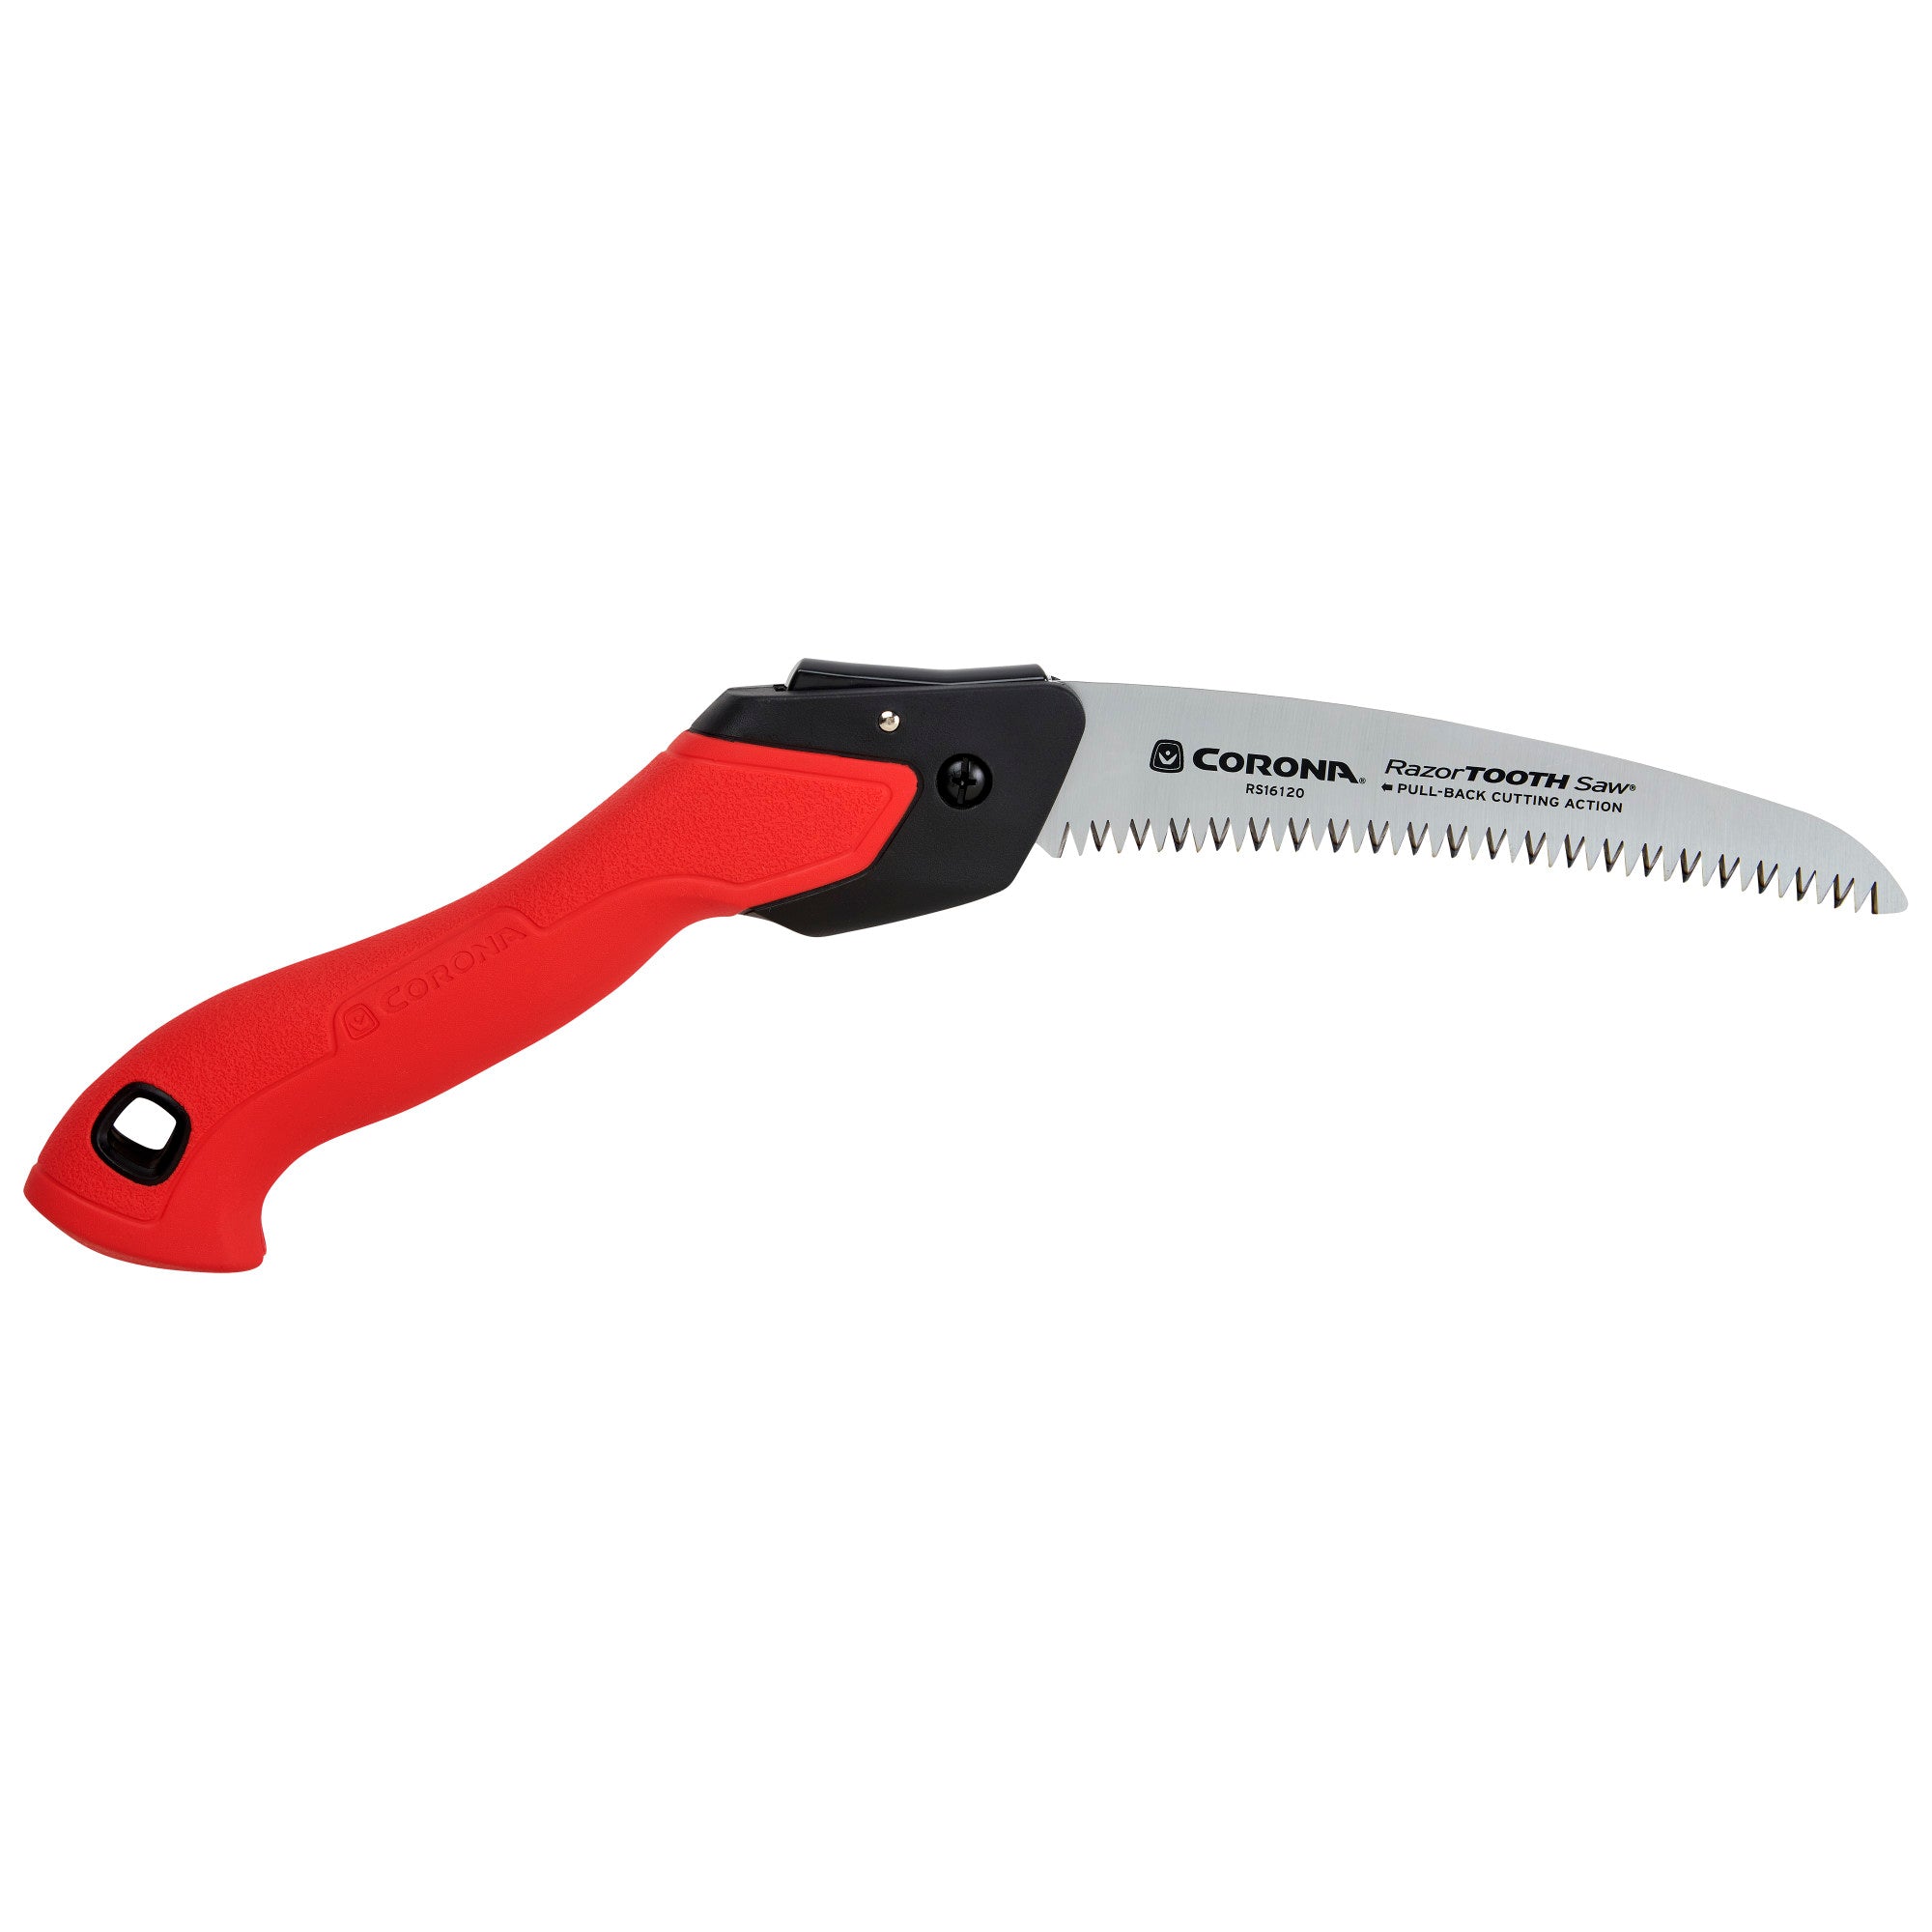 RazorTOOTH Saw® Folding Pruning Saw, 7 in Blade